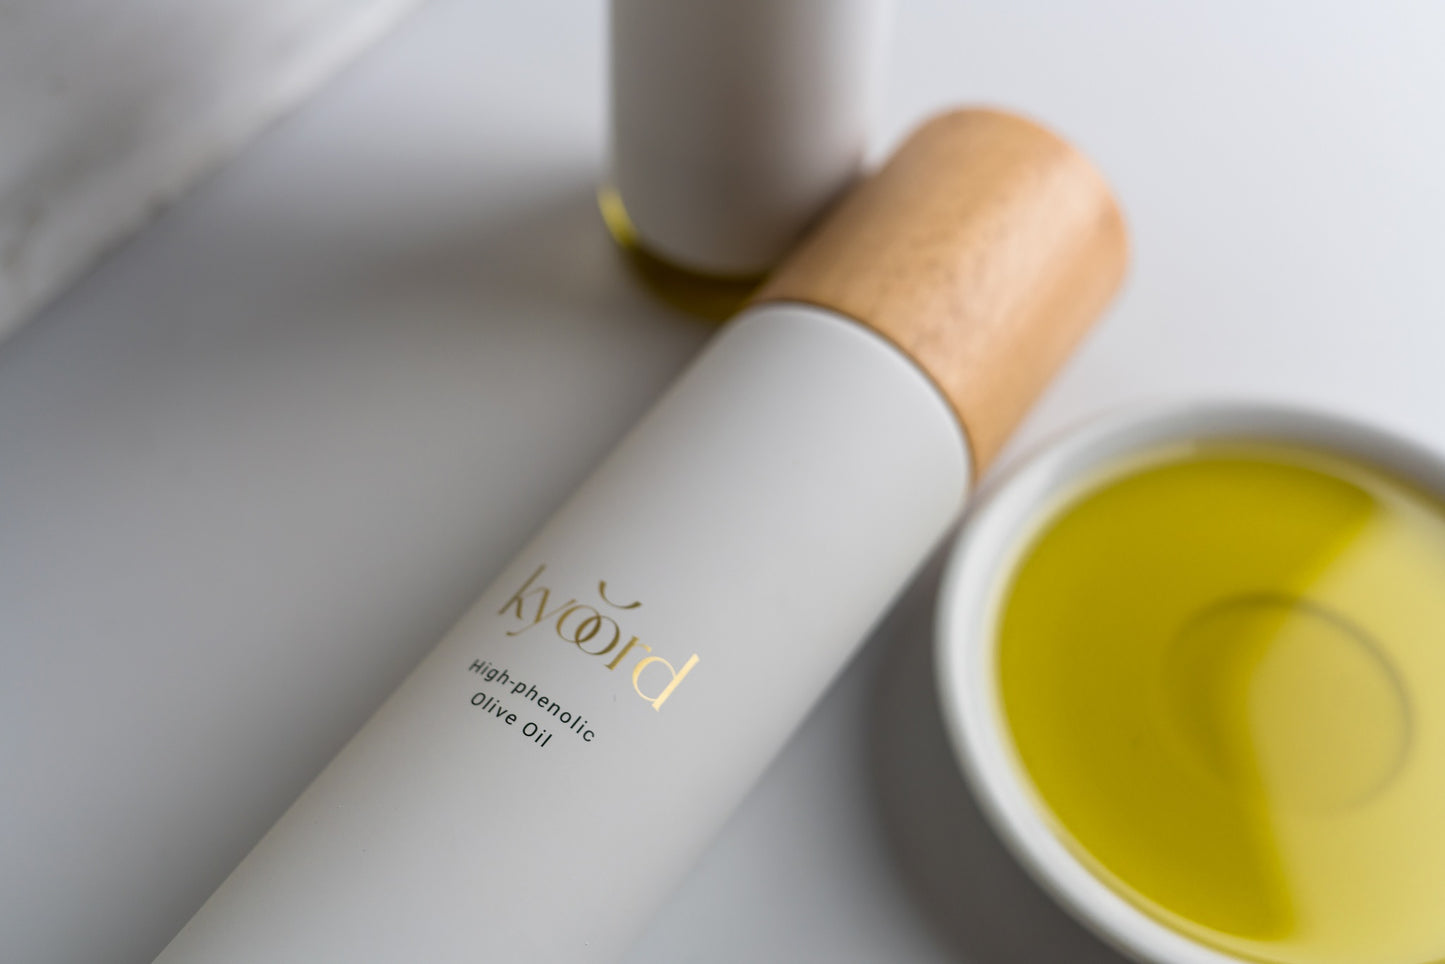 kyoord High-phenolic Olive Oil